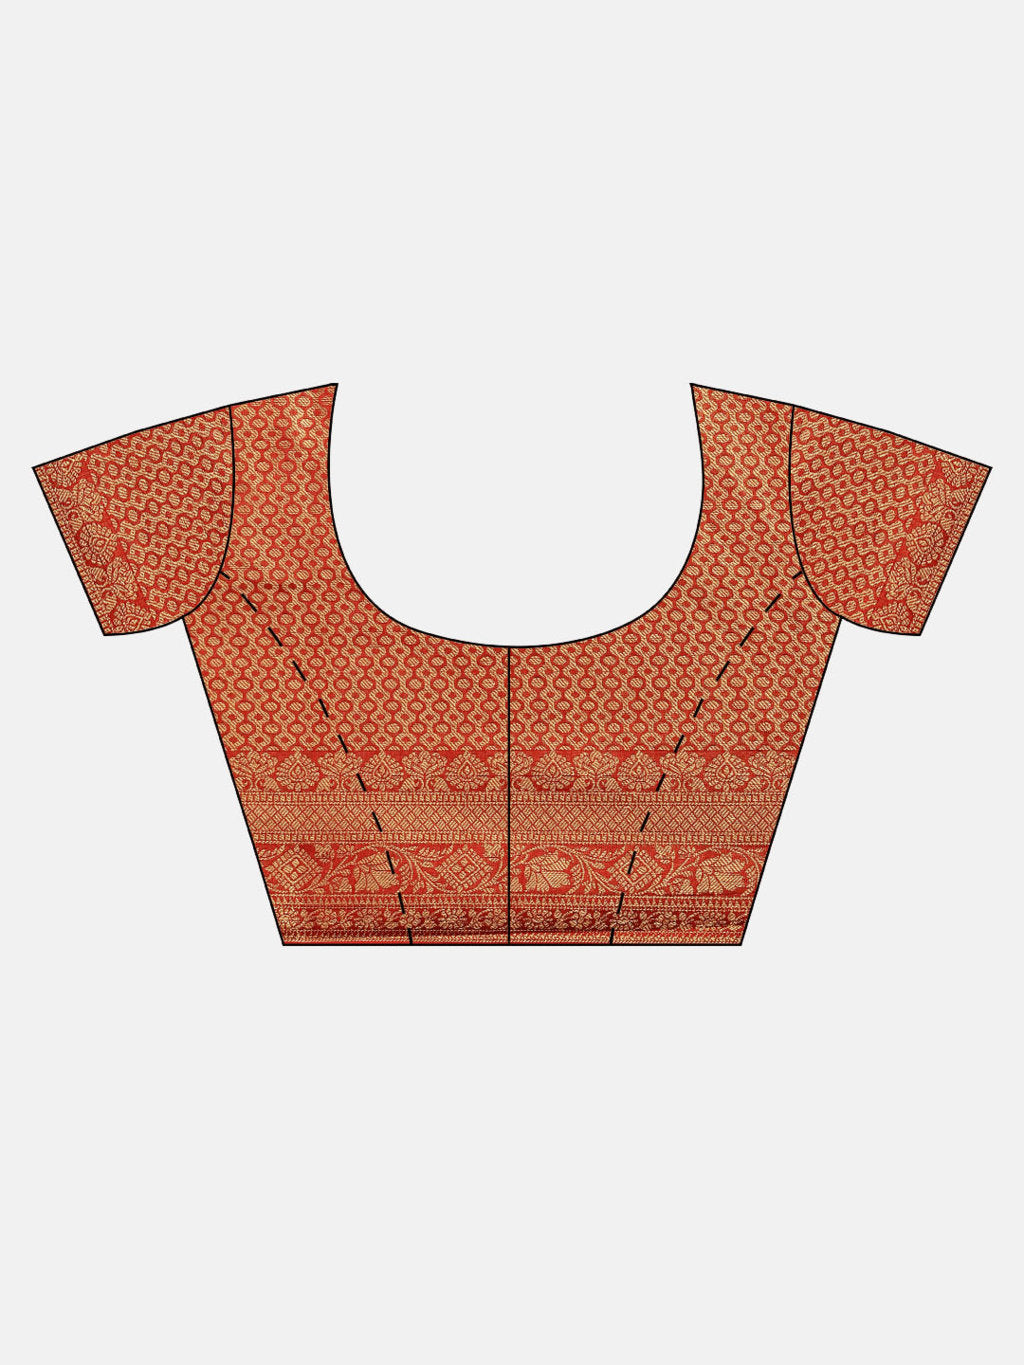 Women's Black Handloom Silk Jacquard Traditional Saree - Sangam Prints